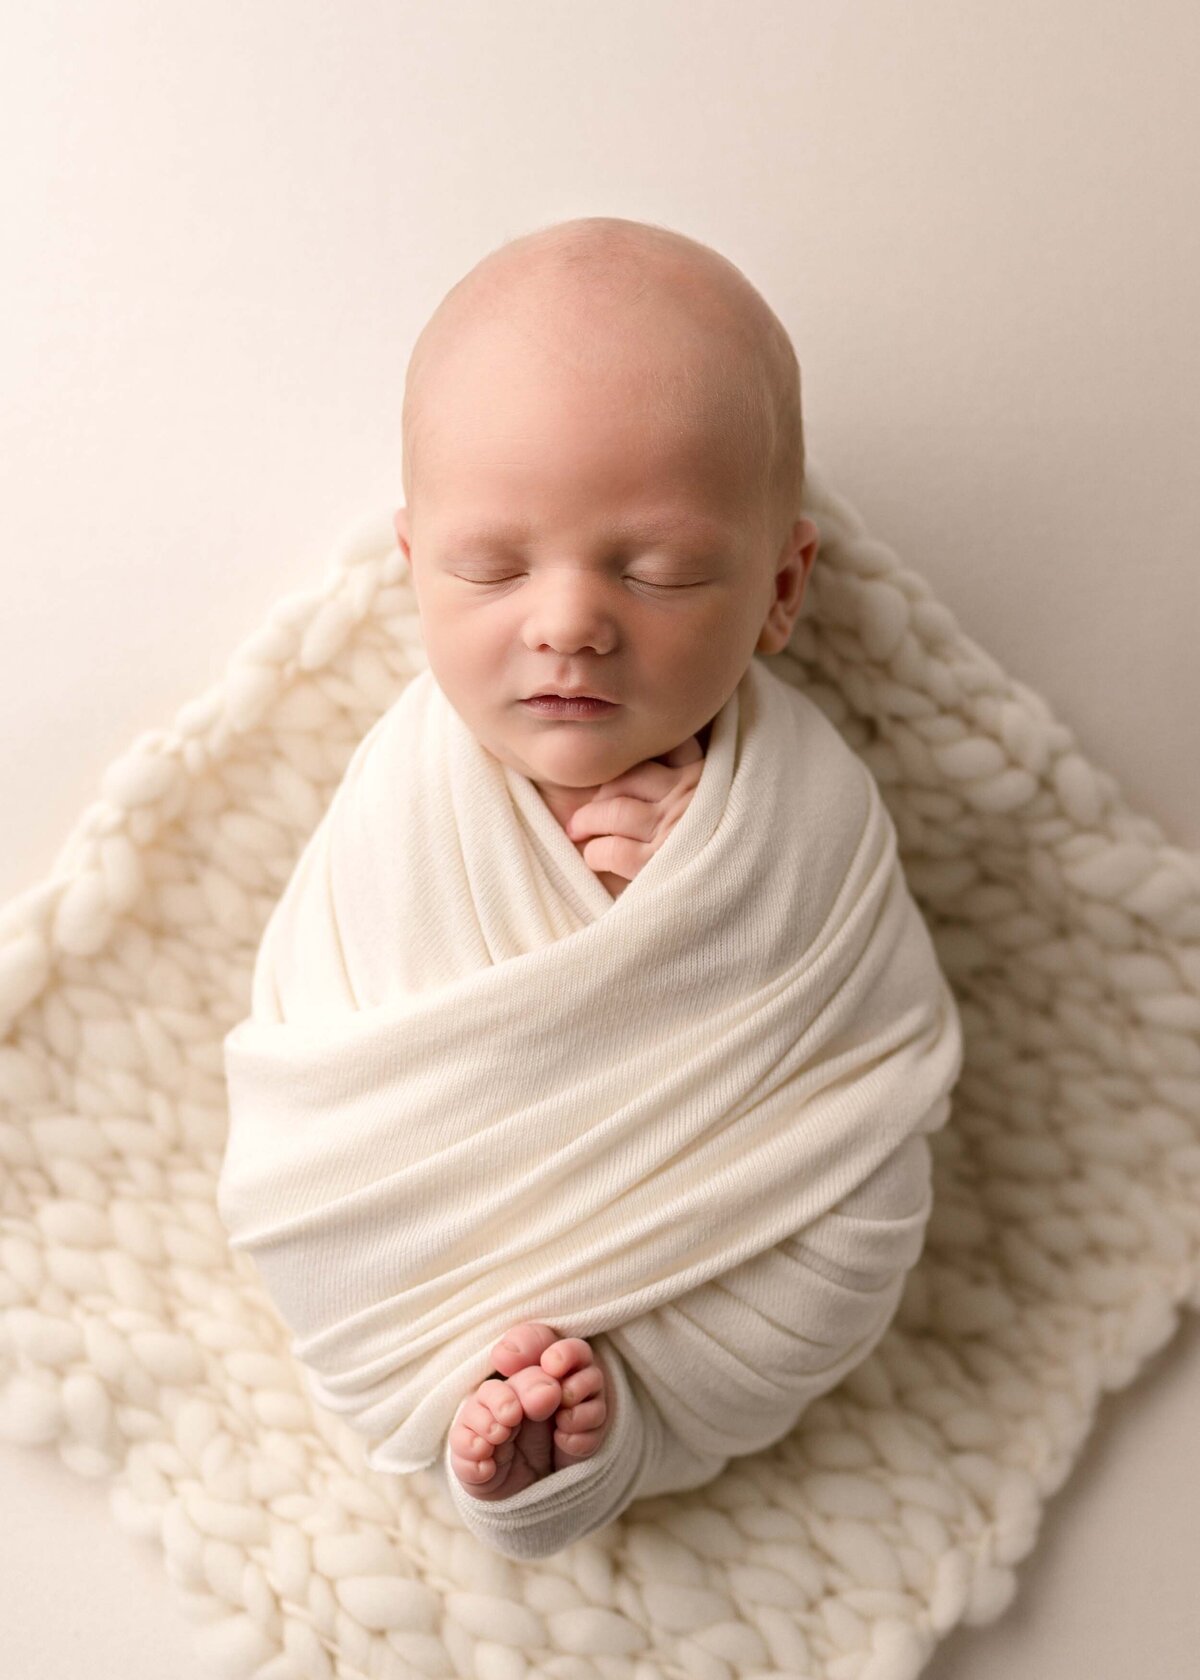 Newborn Swaddled In Cream Blanket